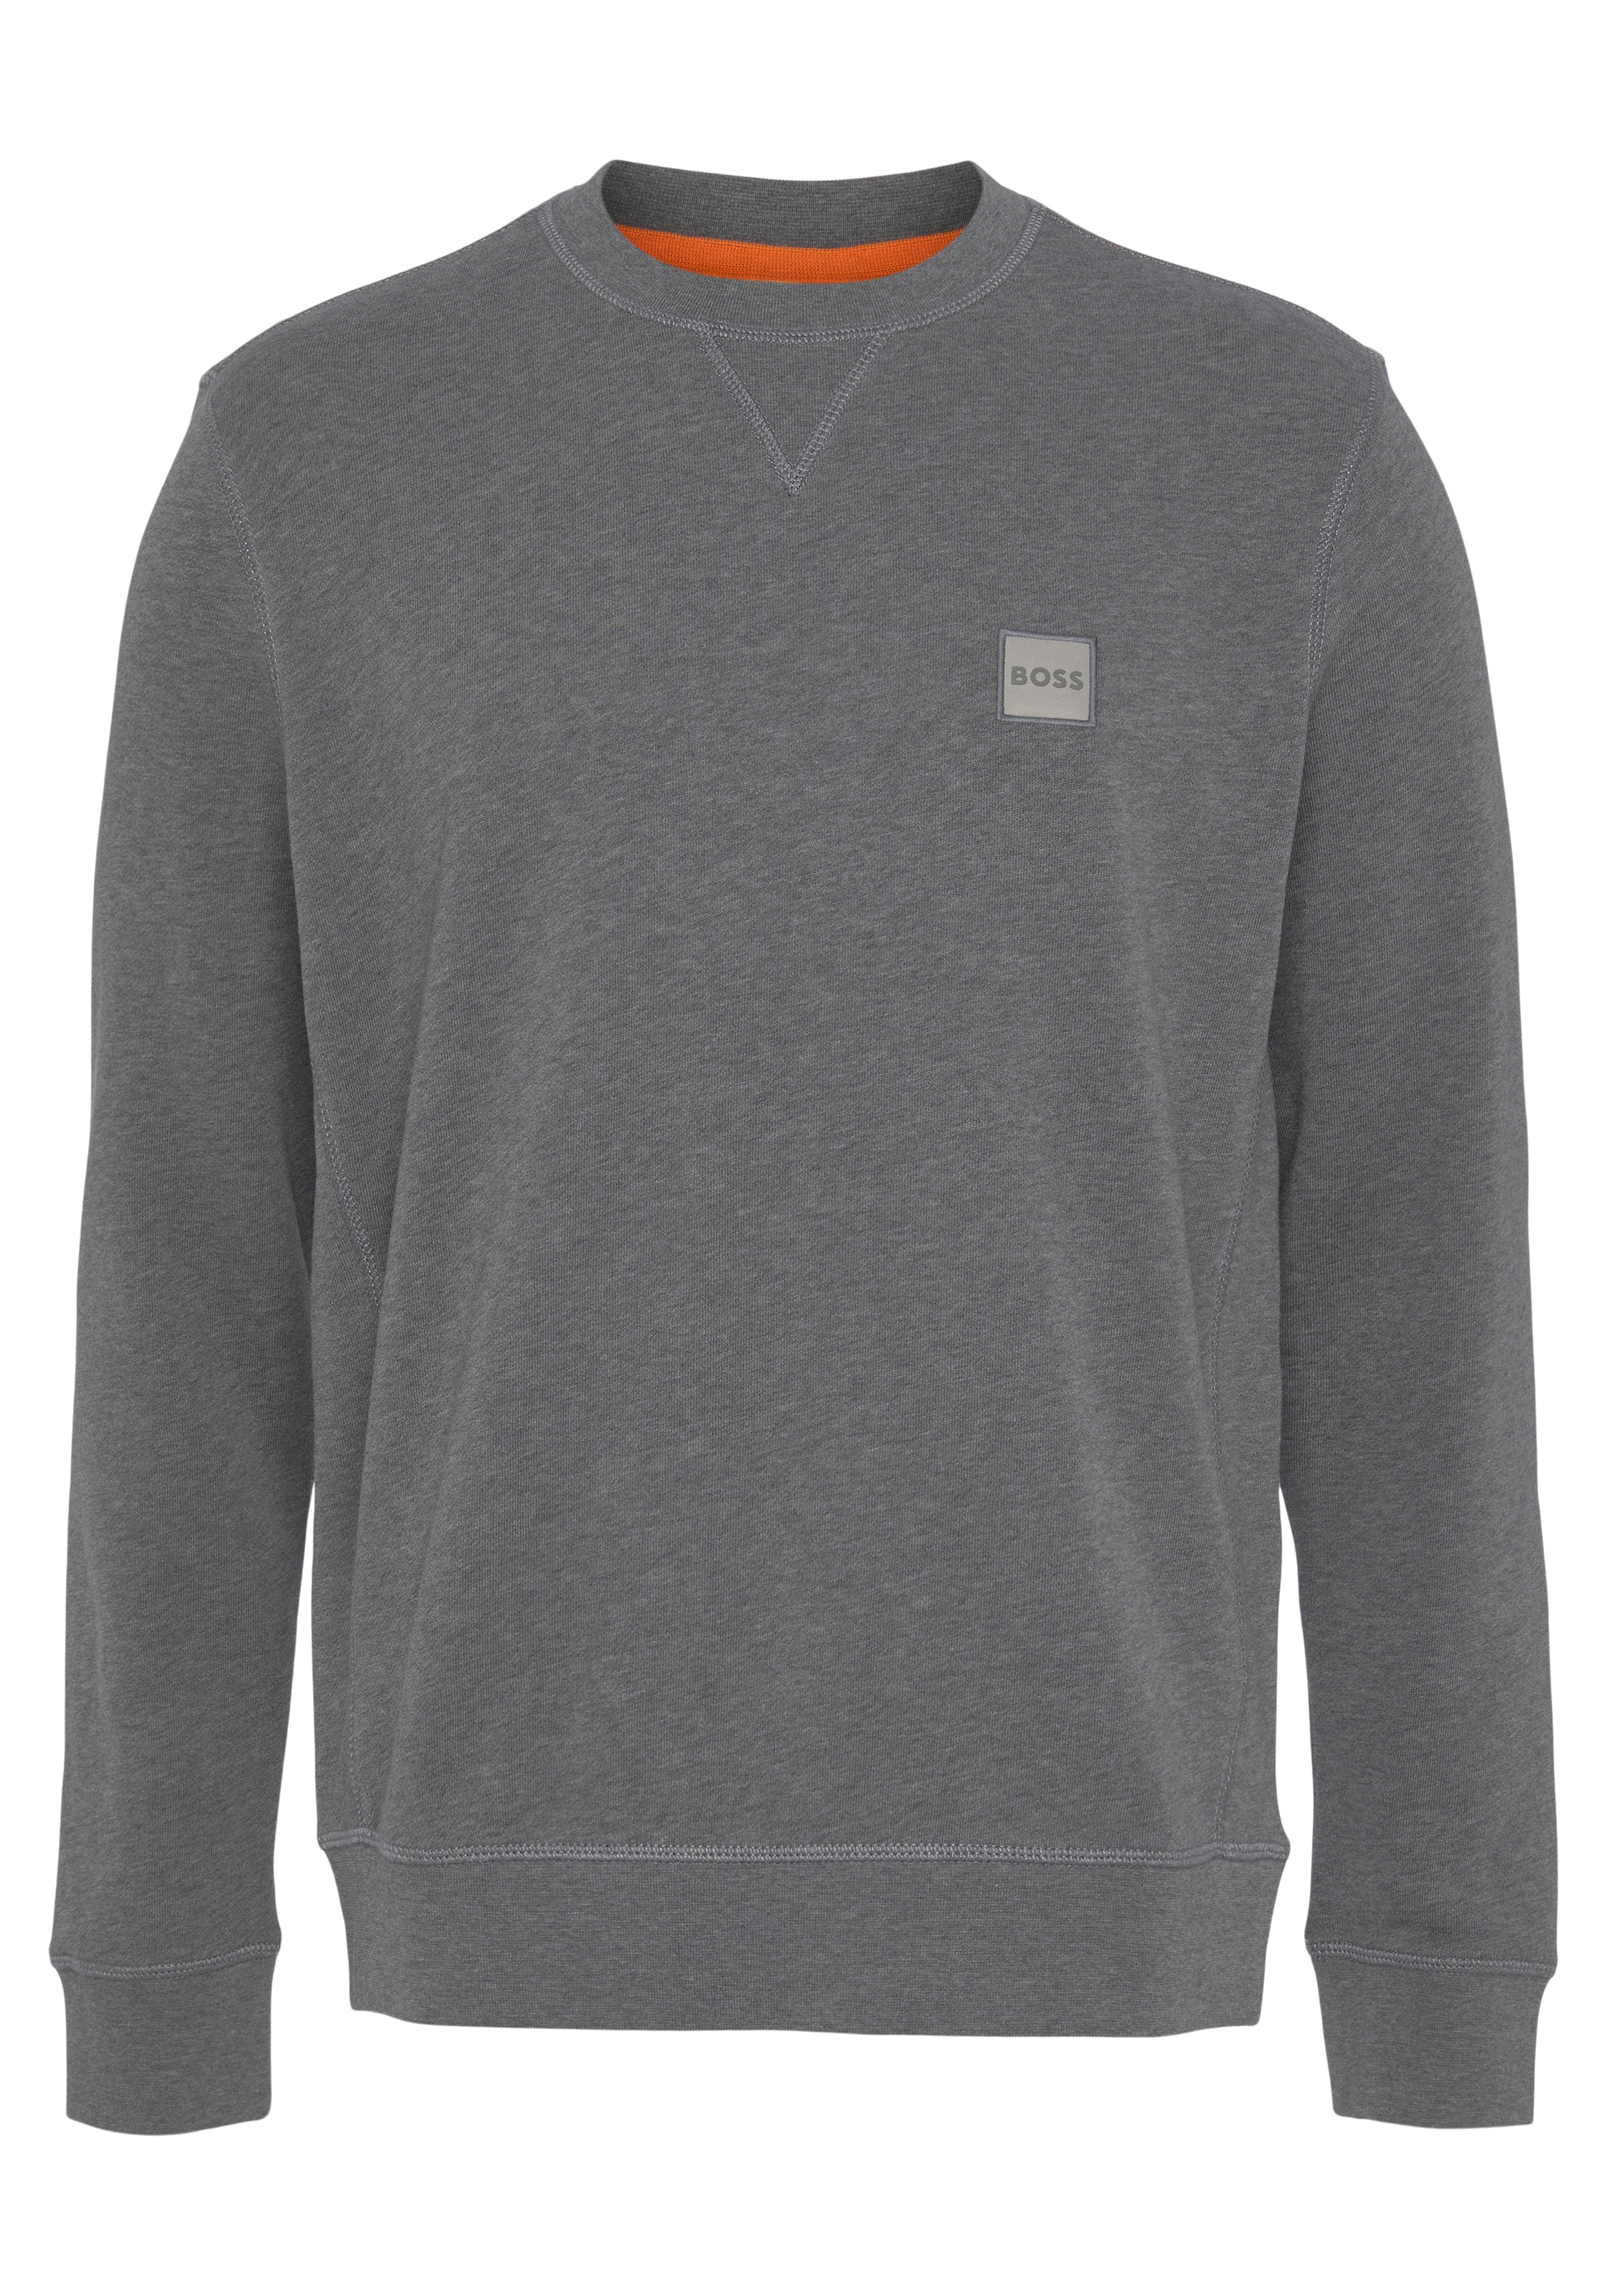 BOSS bei Logo ORANGE mit OTTO BOSS »Westart«, aufgesticktem Sweatshirt shoppen online